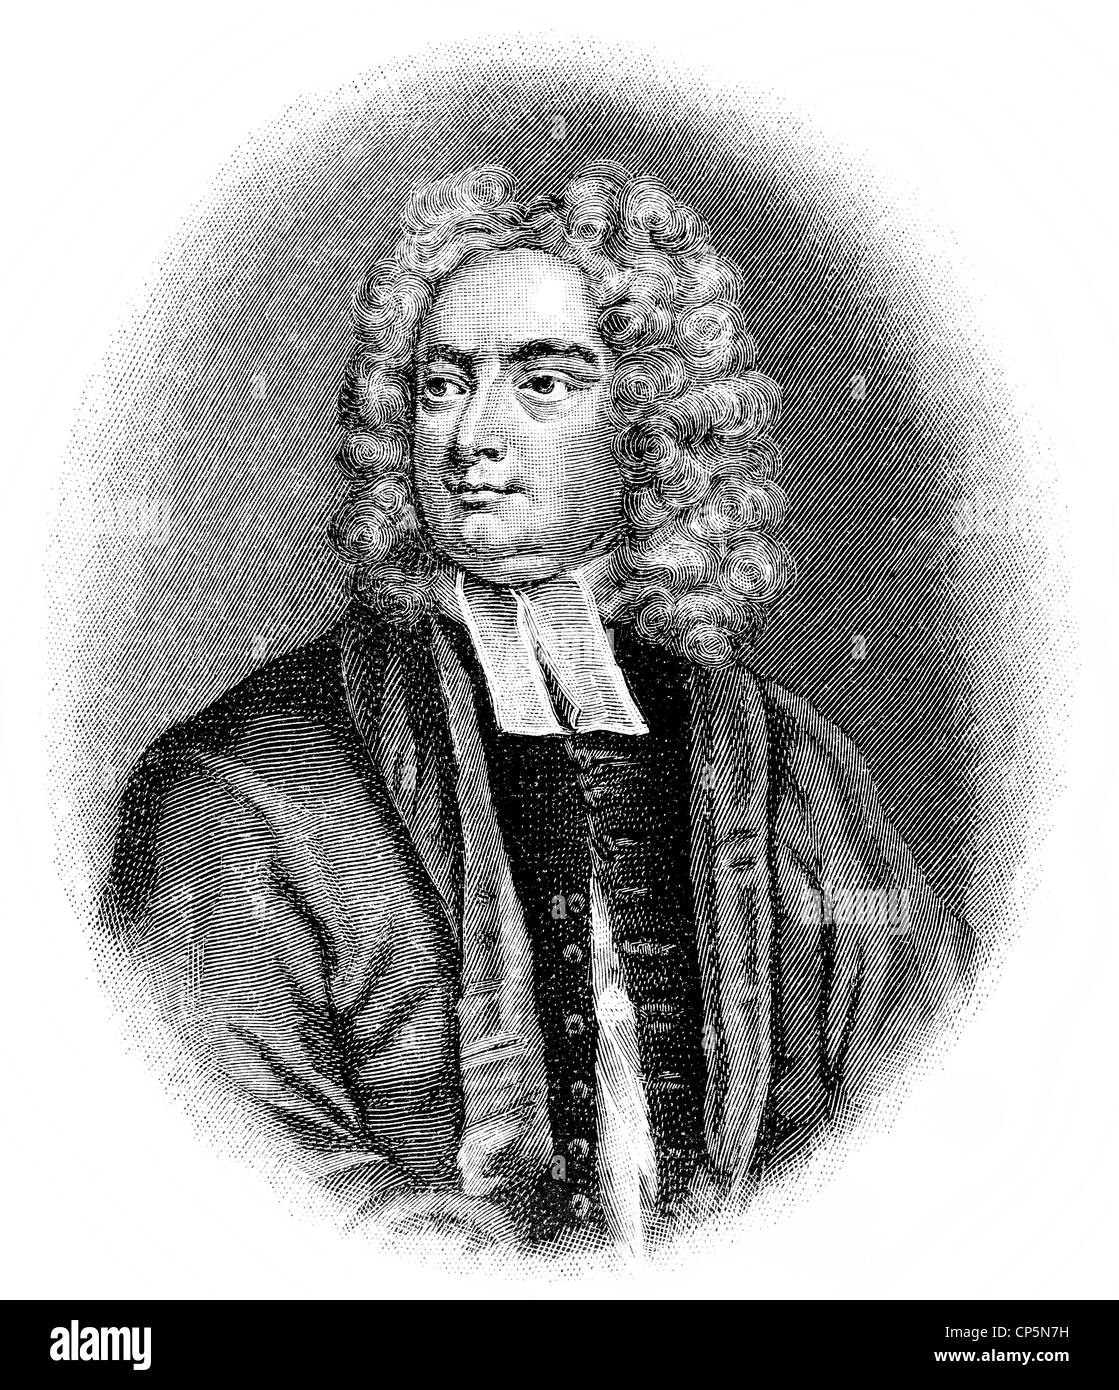 Jonathan Swift or Isaac Bickerstaff, 1667 - 1745, Irish writer, satirist of the early Enlightenment, author Gulliver's Travels Stock Photo